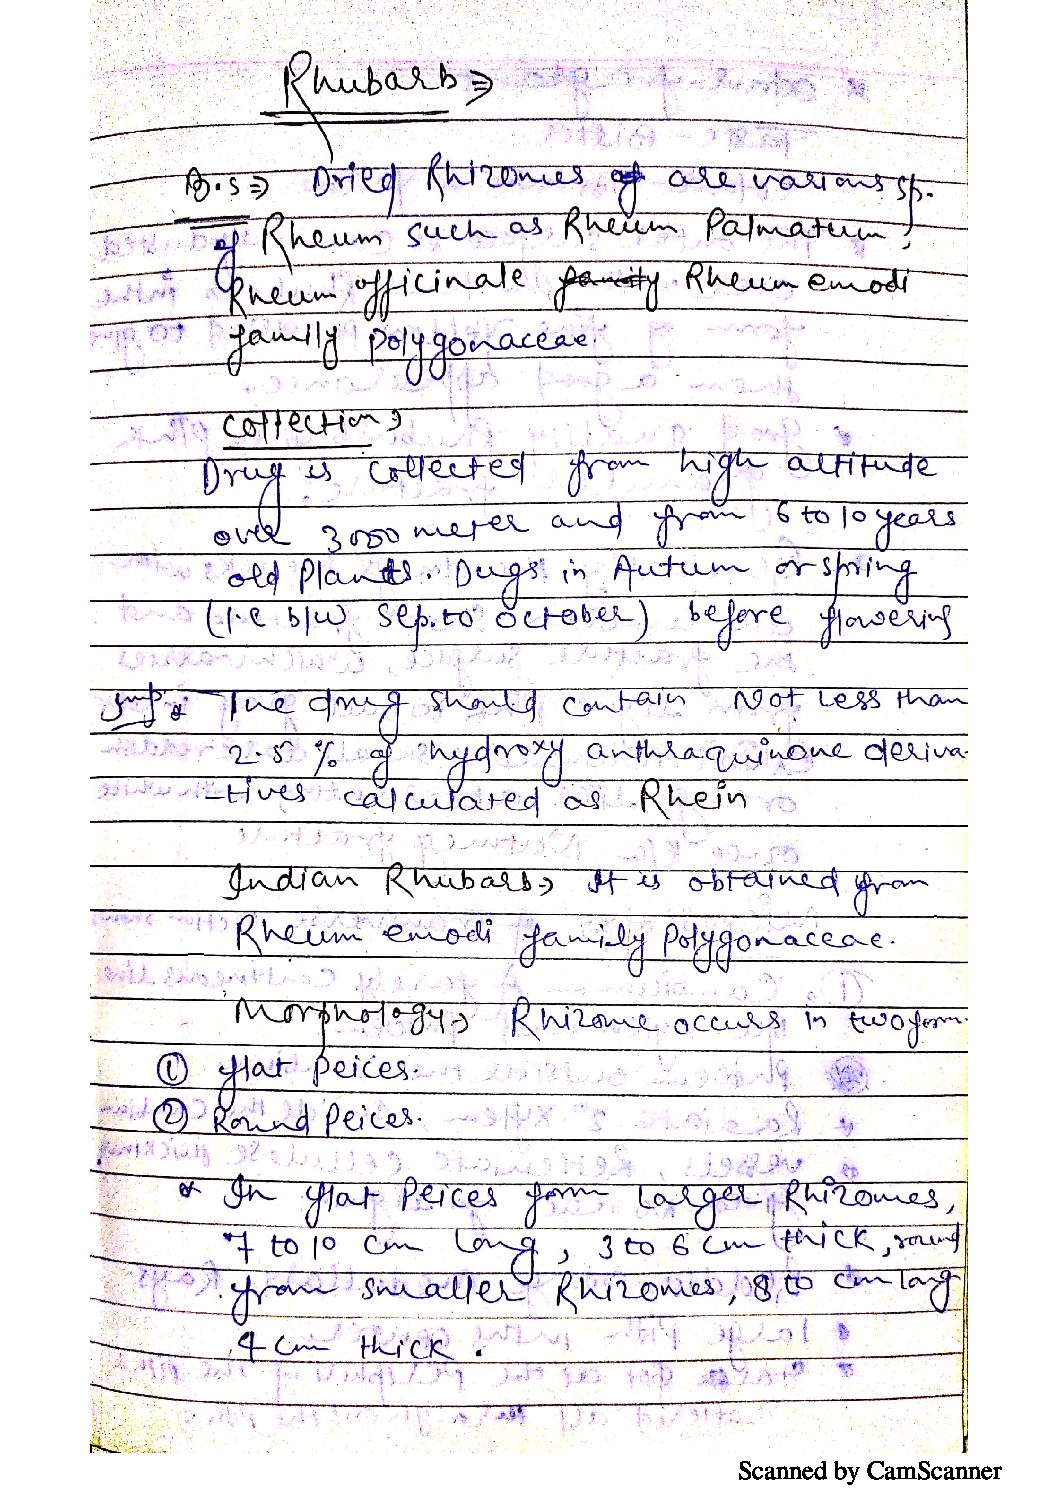 unit 1 pharmacognosy Rhubarb pharm364. pdf Rhubarb:- Hand Written Notes